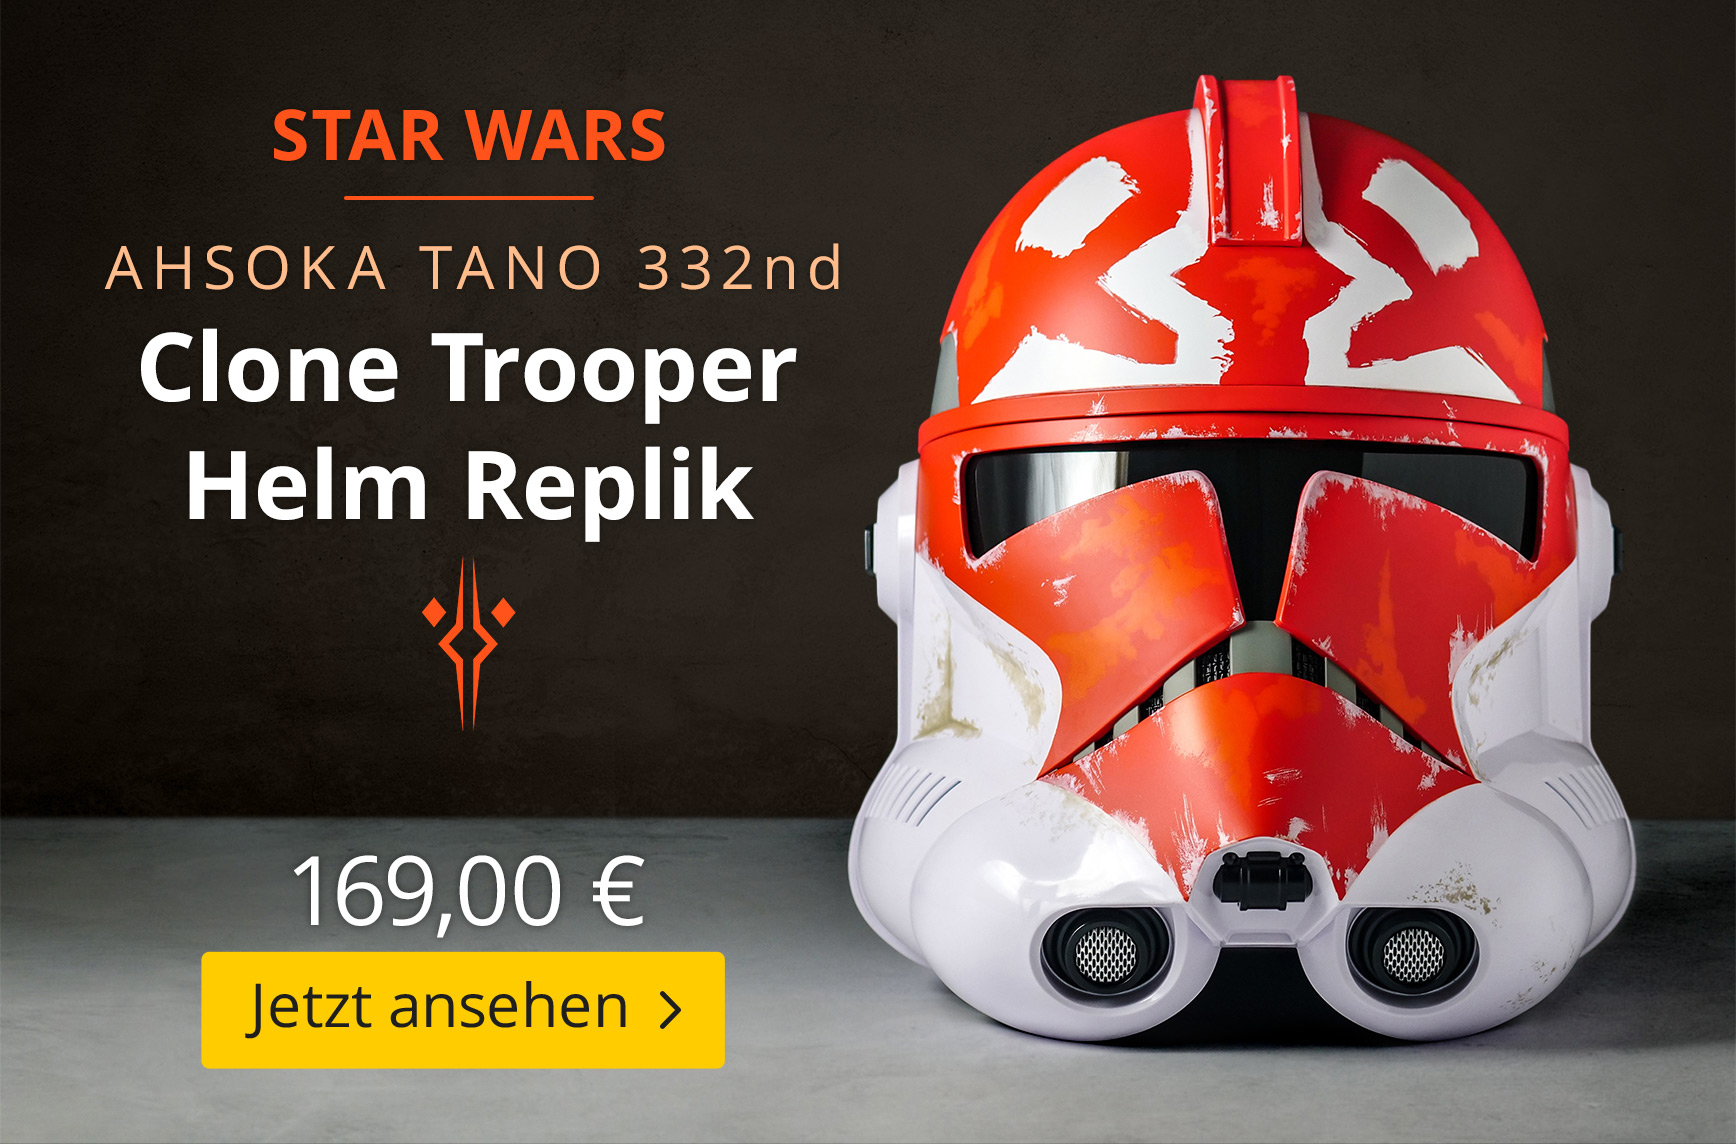 Ahsoka Tano 332nd Clone Trooper Premium Helm Replik mit Stimmenverzerrer - Star Wars - 169 EUR